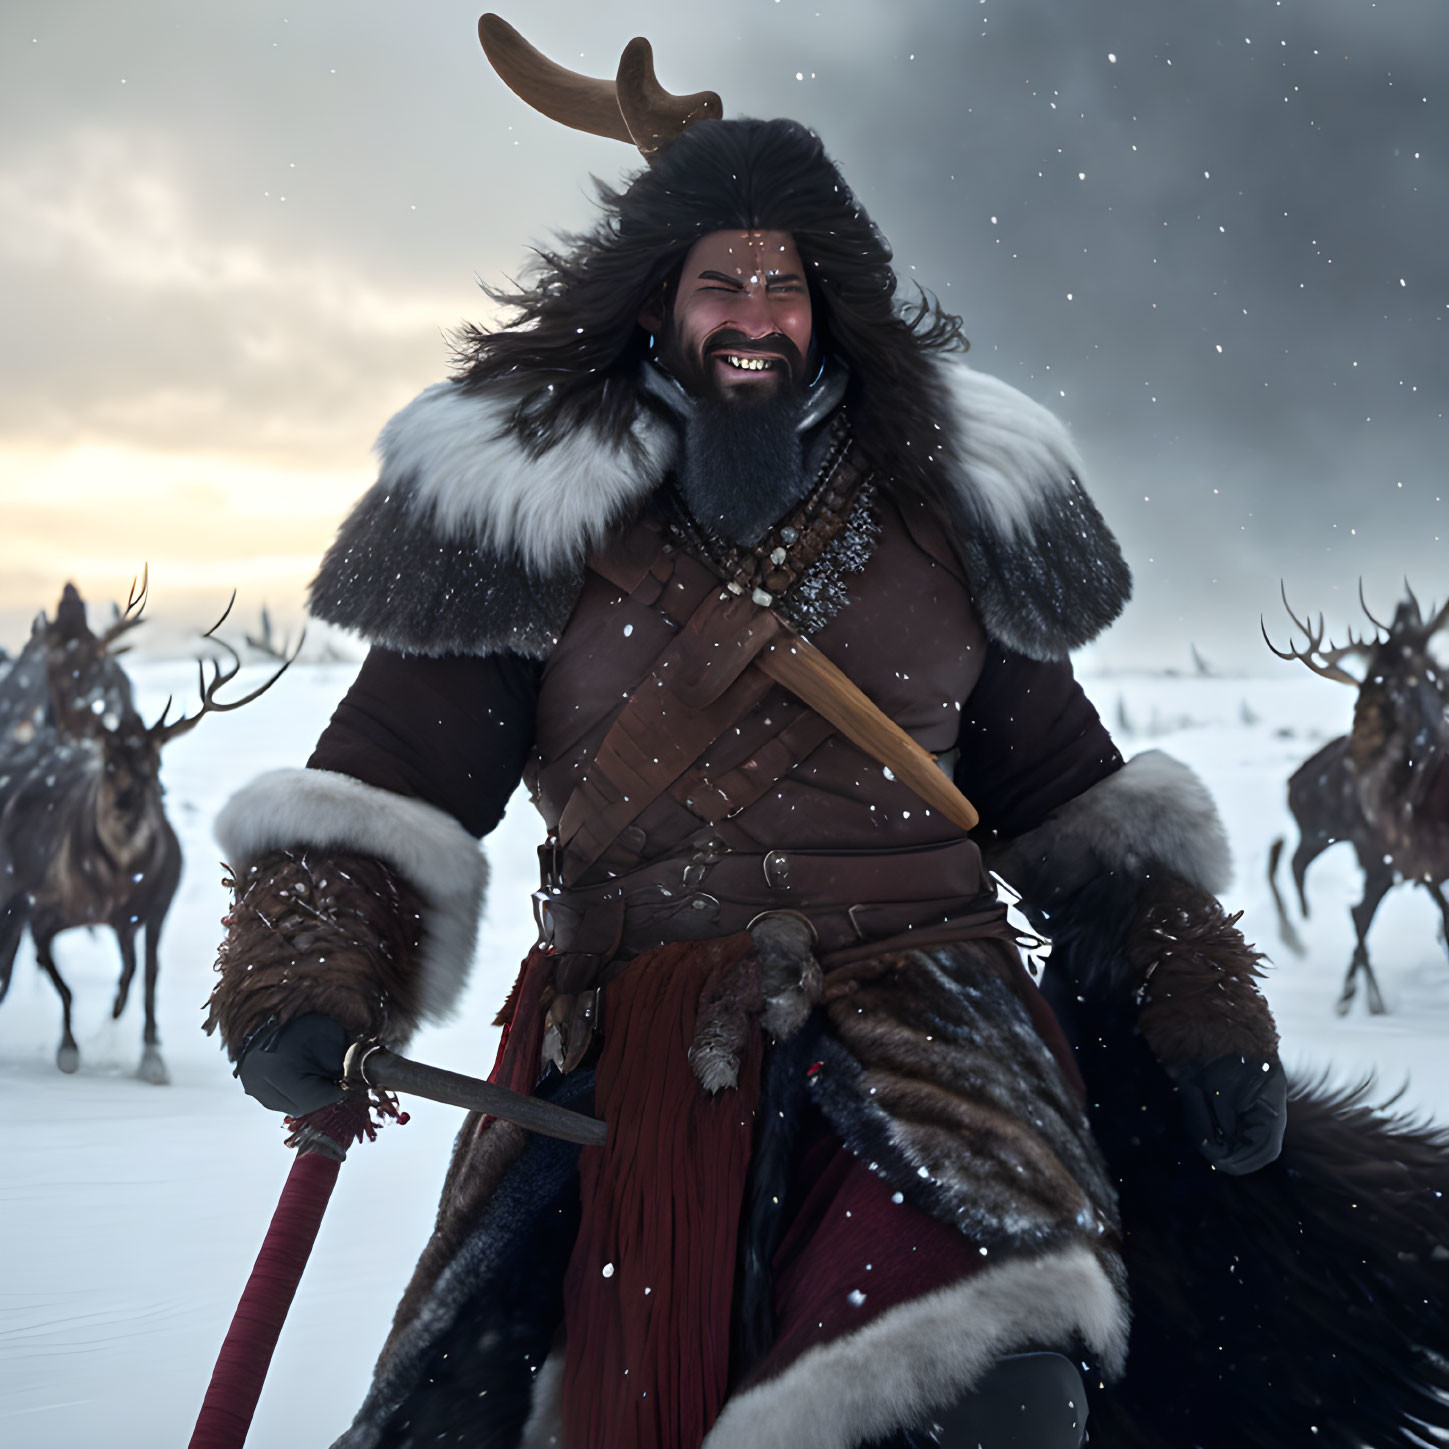 Bearded warrior in fur armor with sword among reindeer in snowy landscape